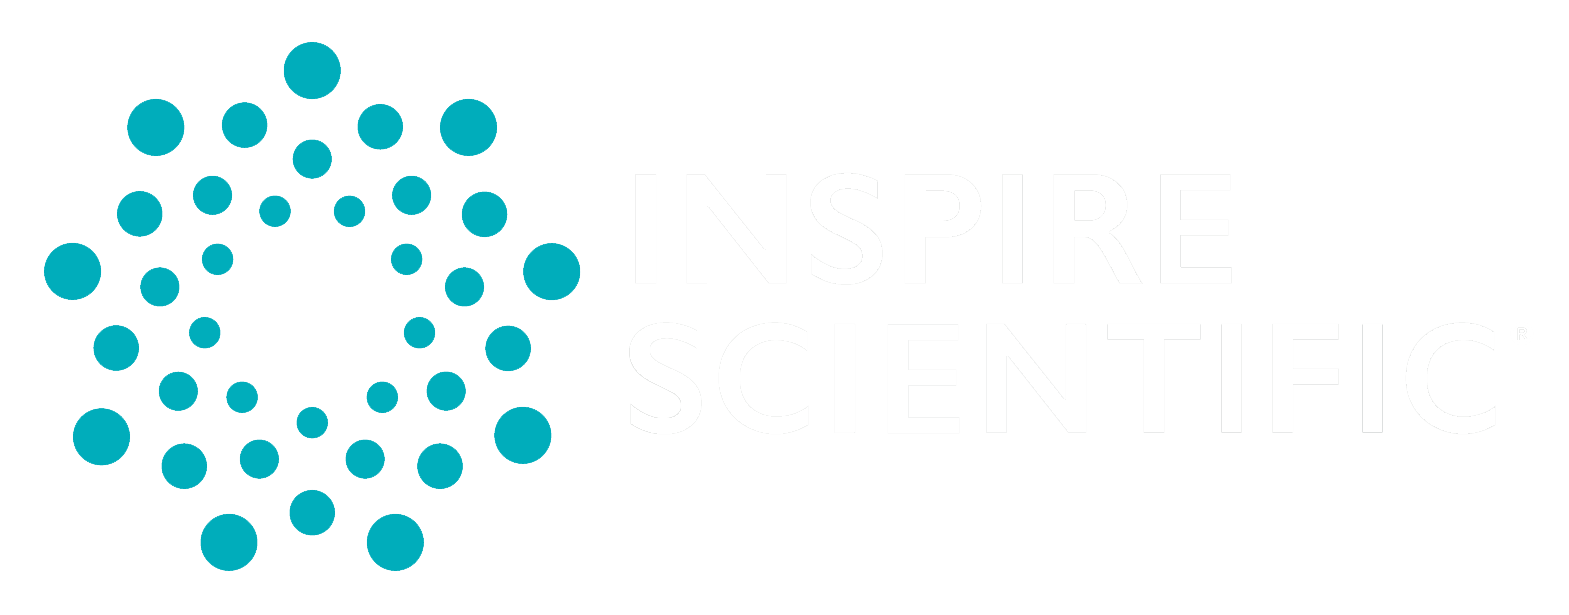 Inspire Scientific Co., Ltd.